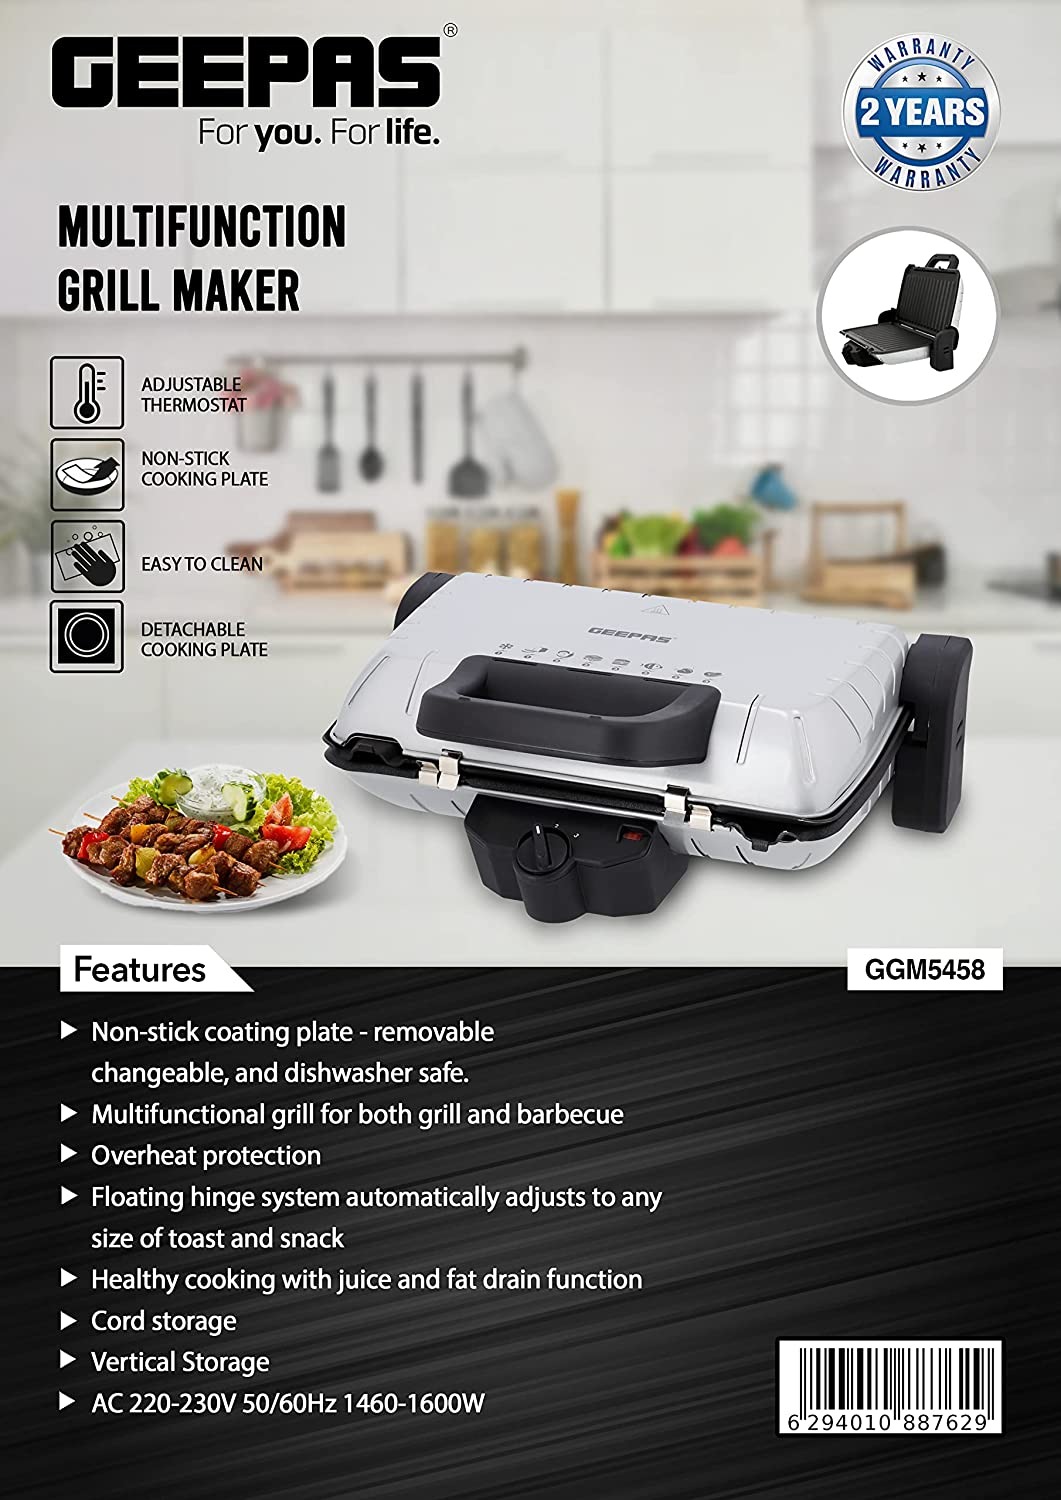 Geepas Multi-Function Grill Maker 1600W – GGM5458 